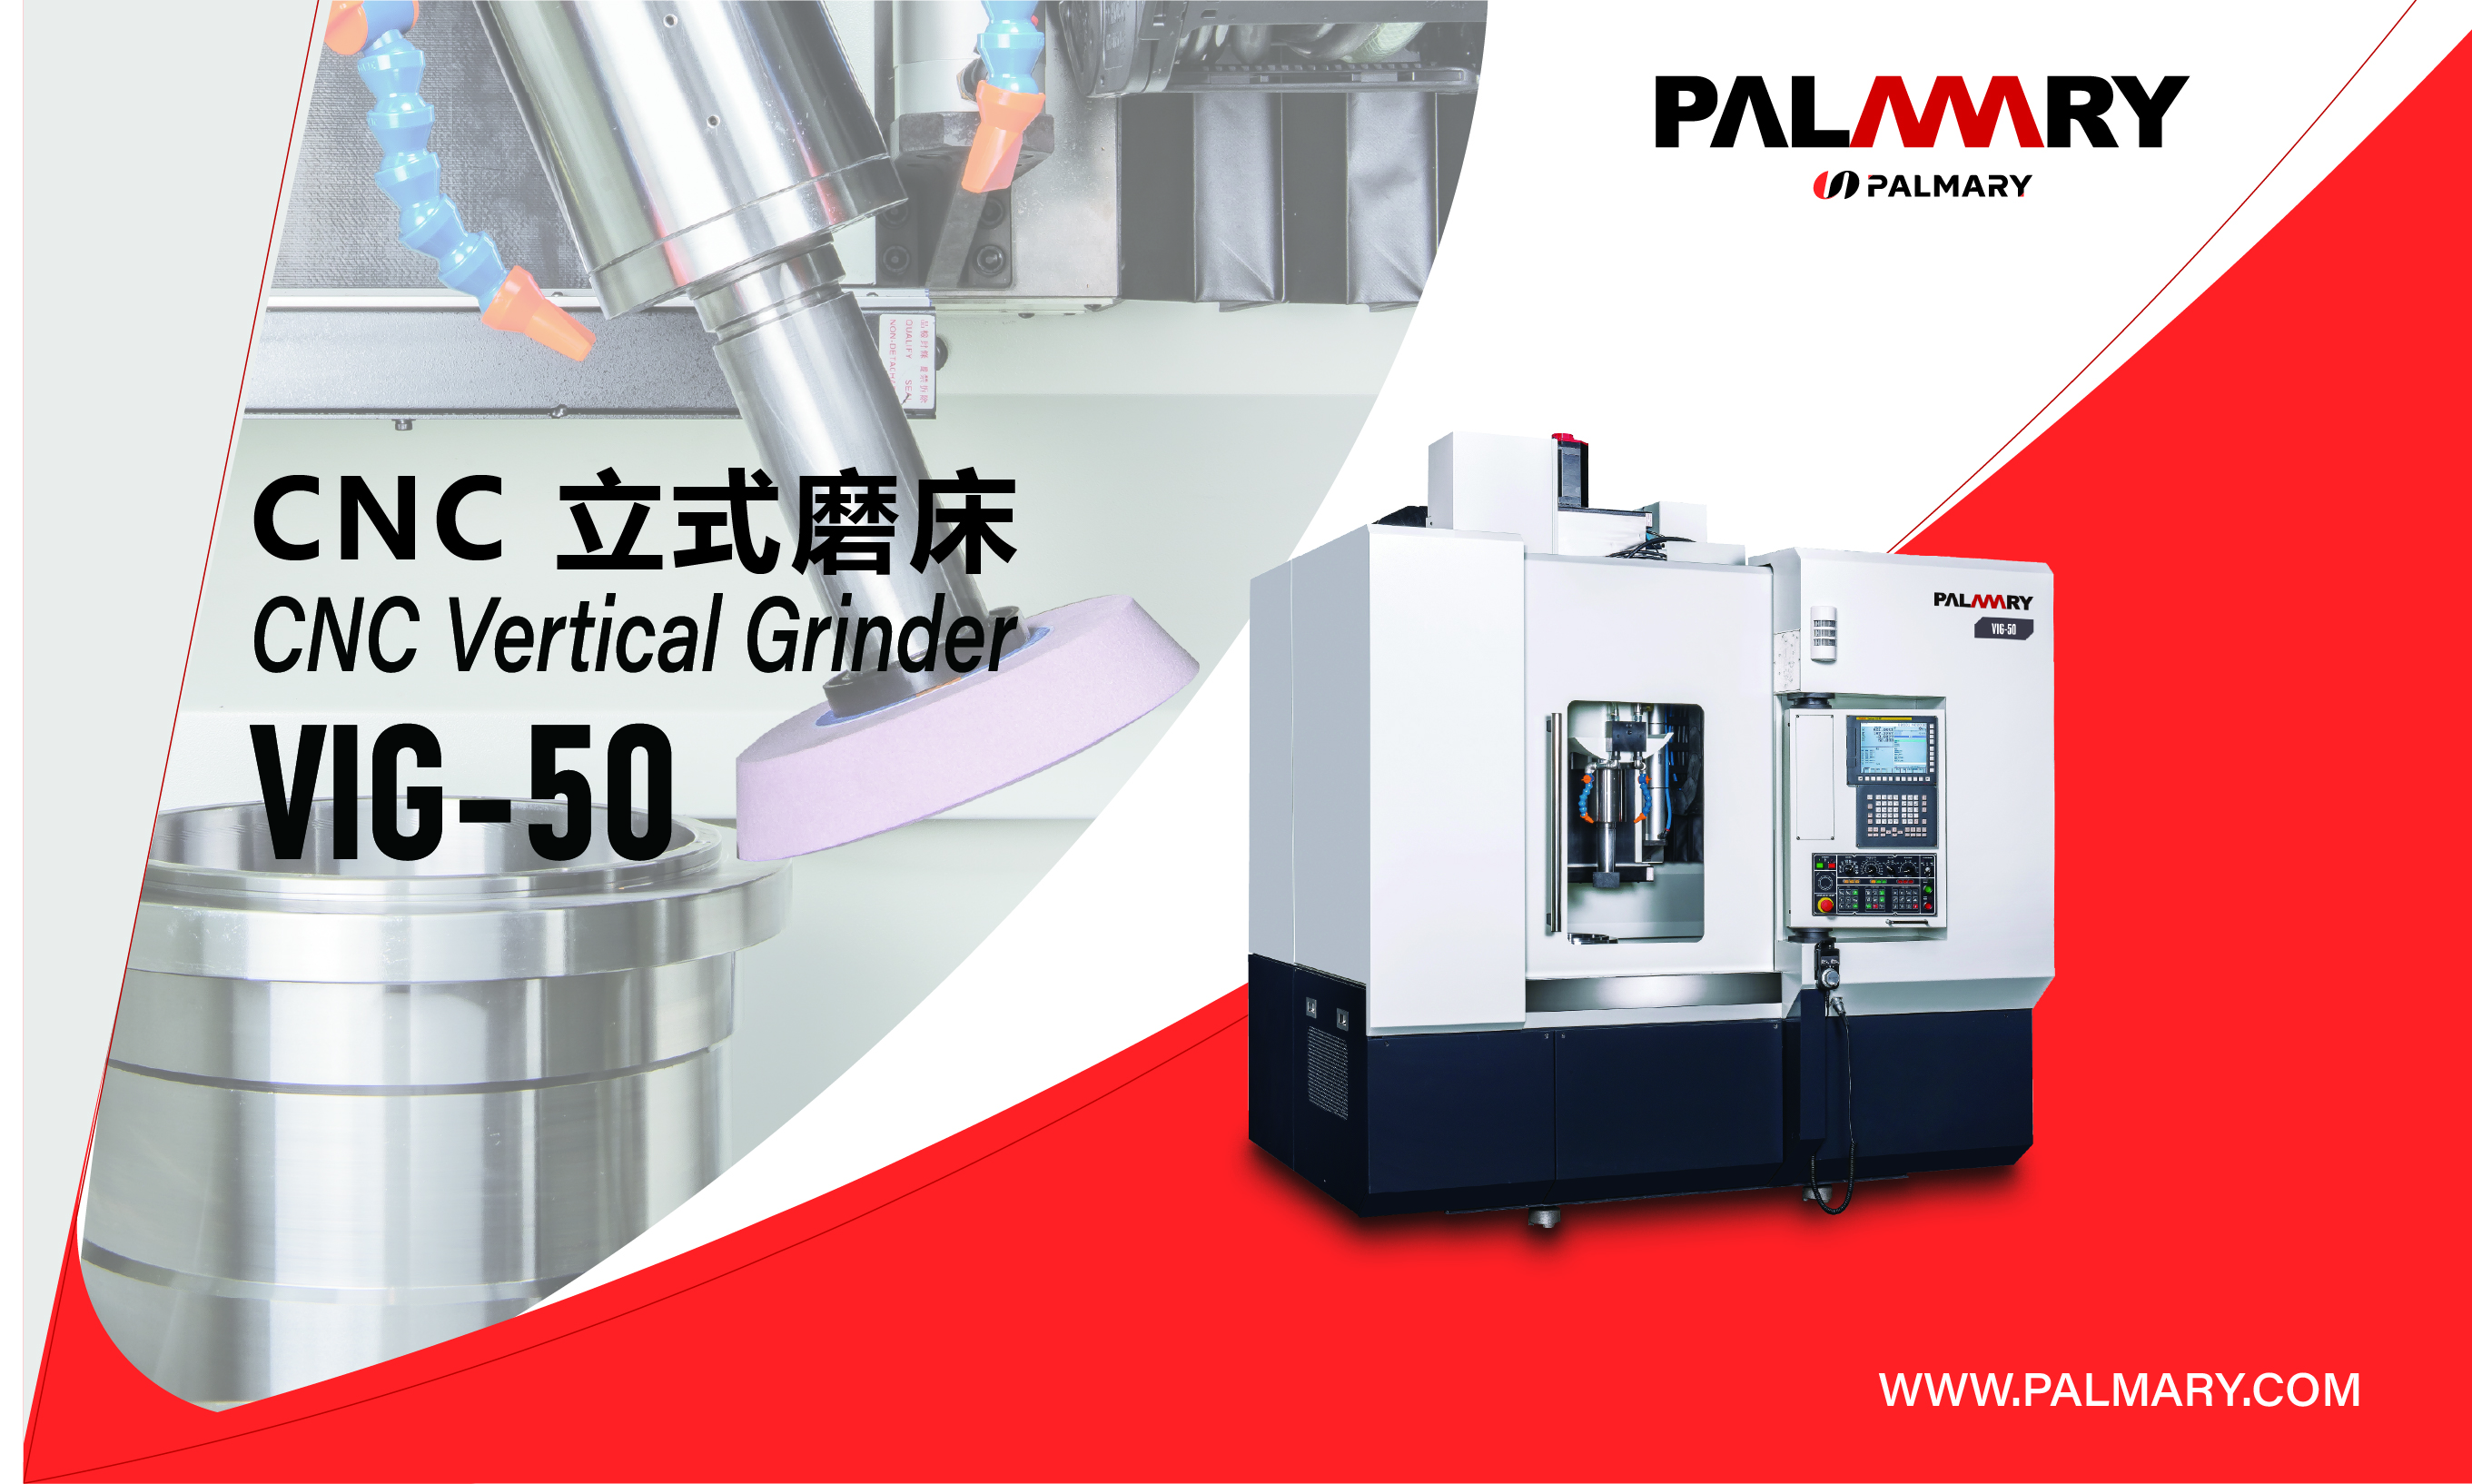 Catalog|PALMARY|CNC Vertical Grinder VIG-50